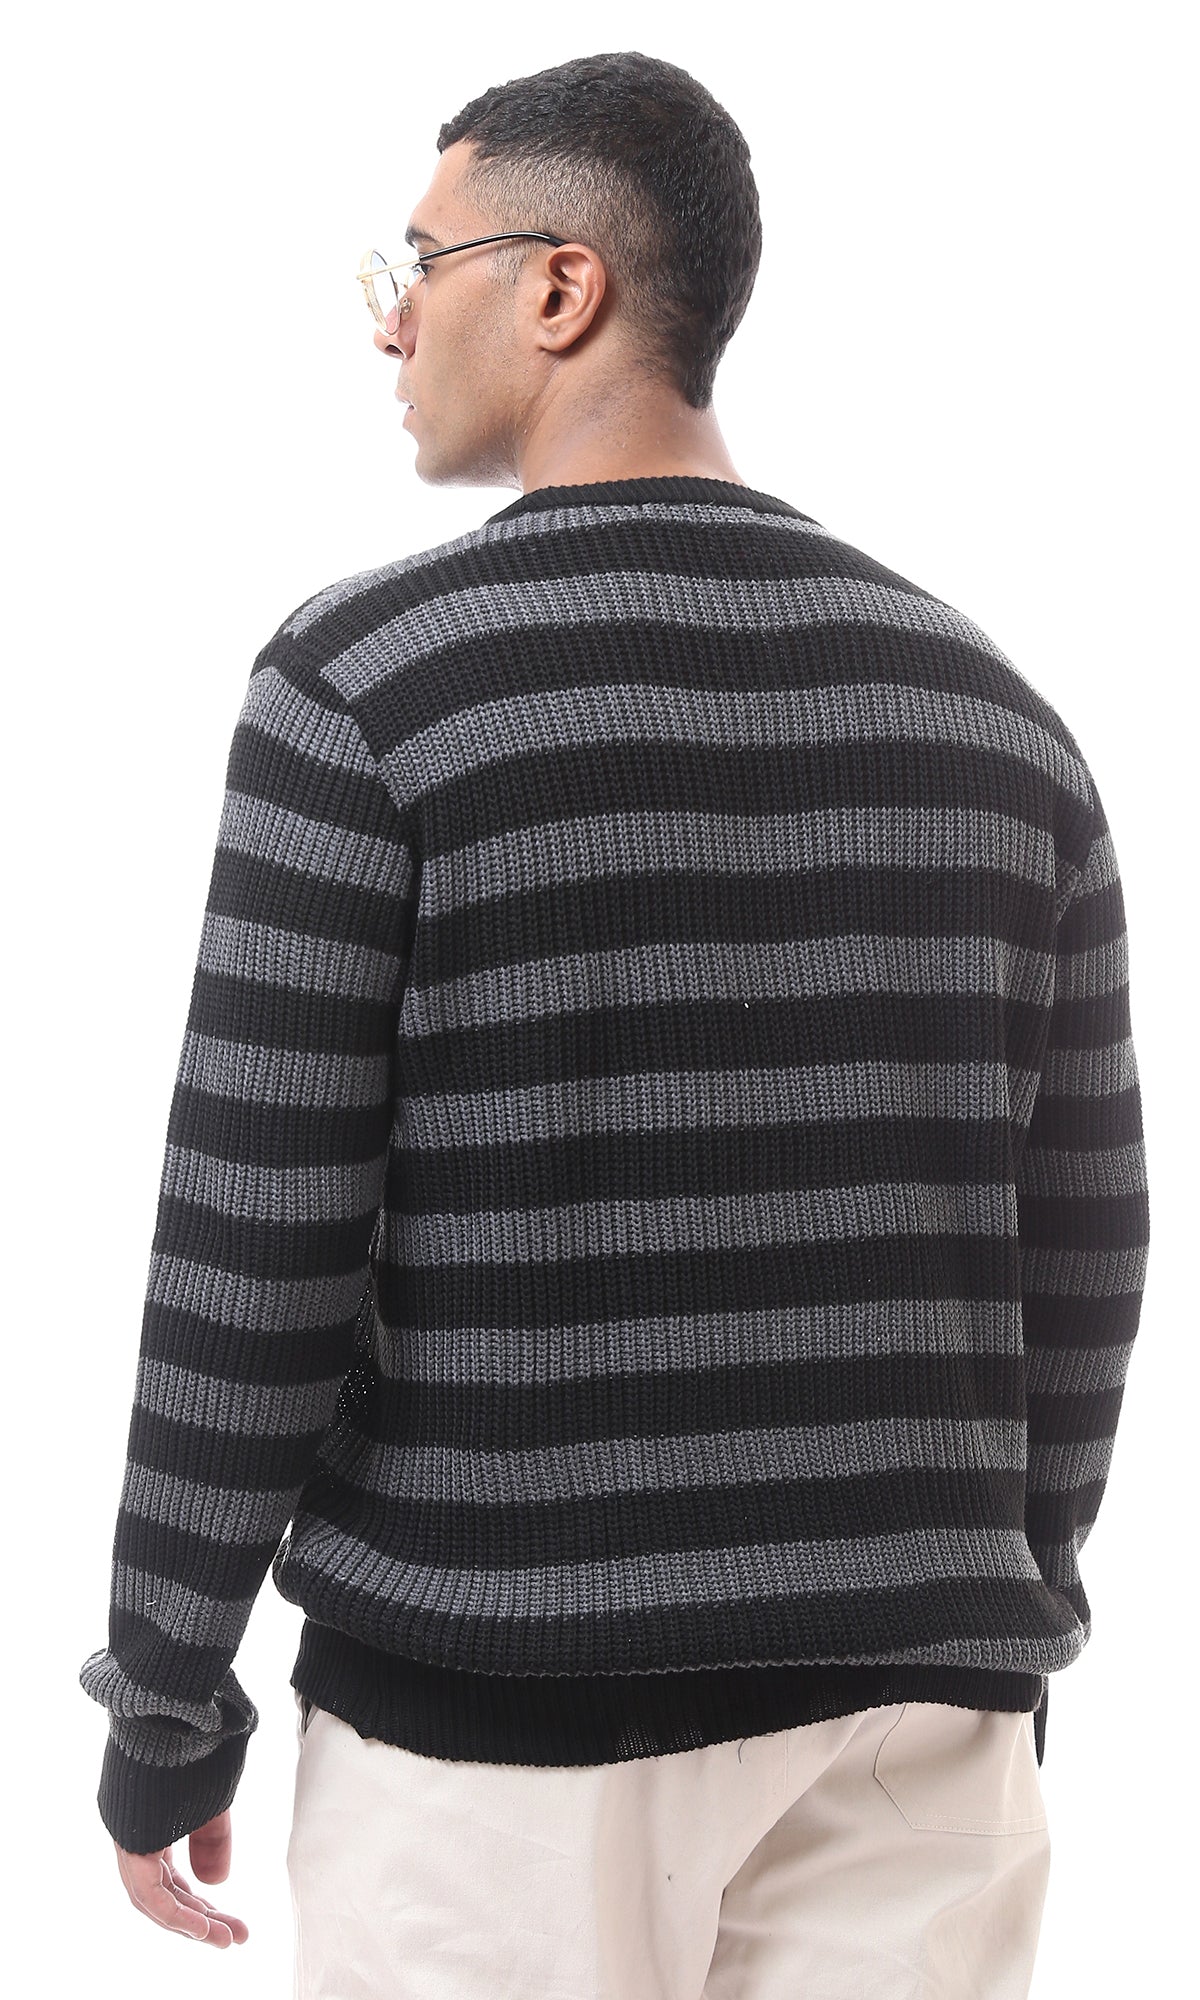 O174773 Bi-Tone Striped Dark Grey & Black Knitted Pullover